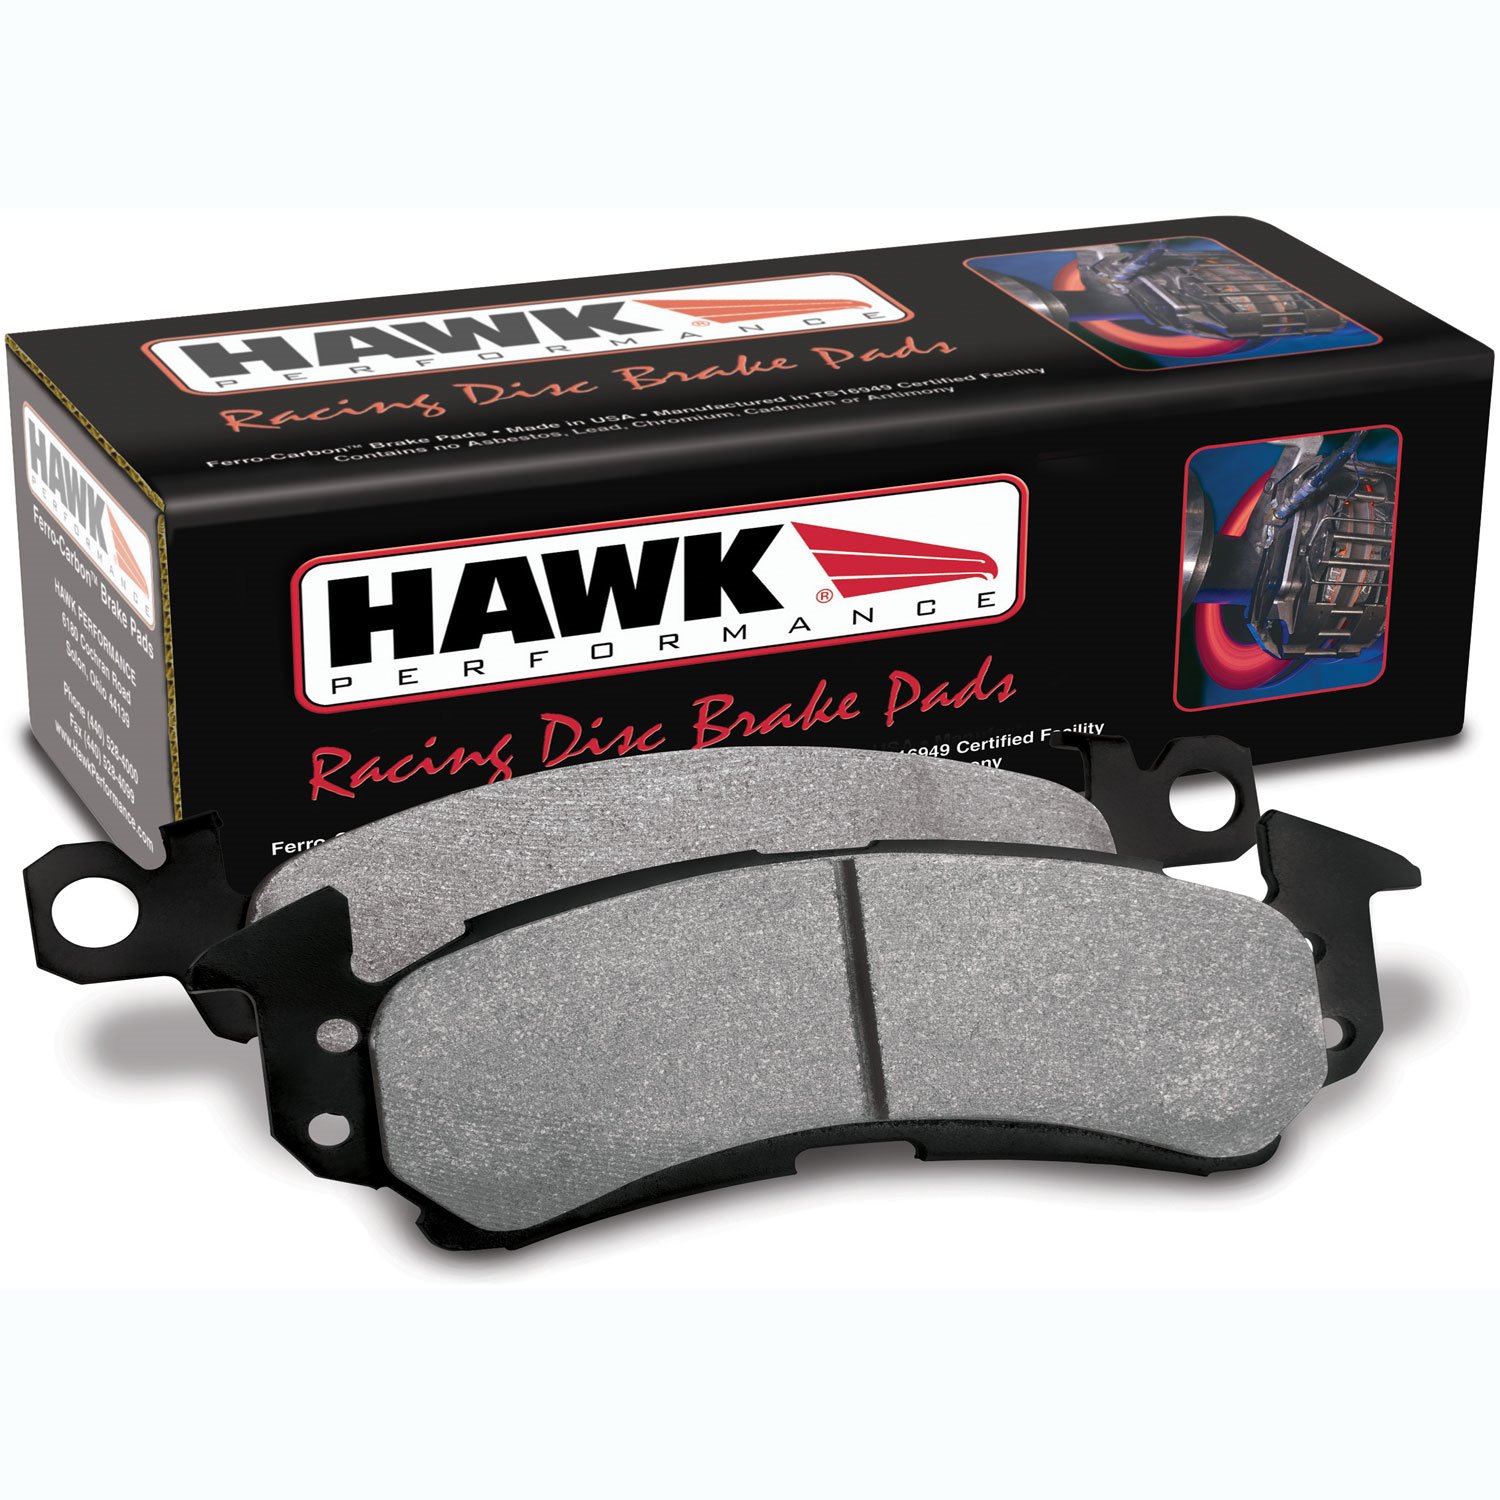 Disc Brake Pad HP Plus w/0.492 Thickness